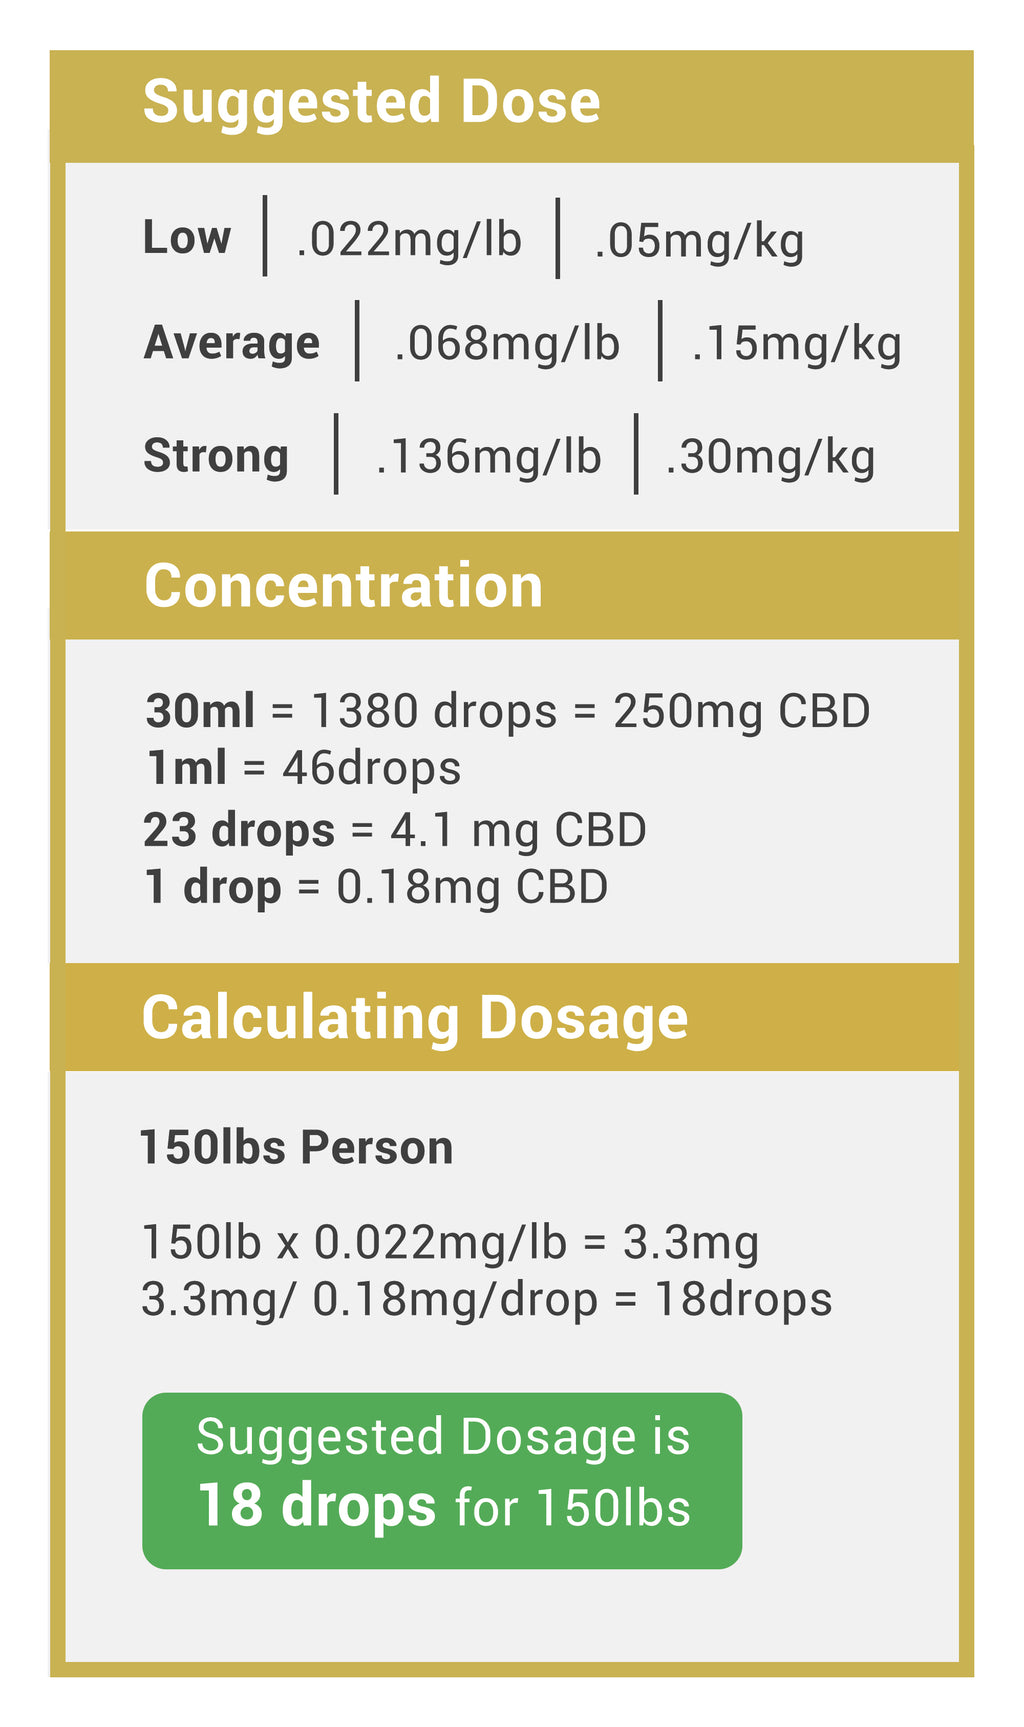 Hempworx Dosage Chart